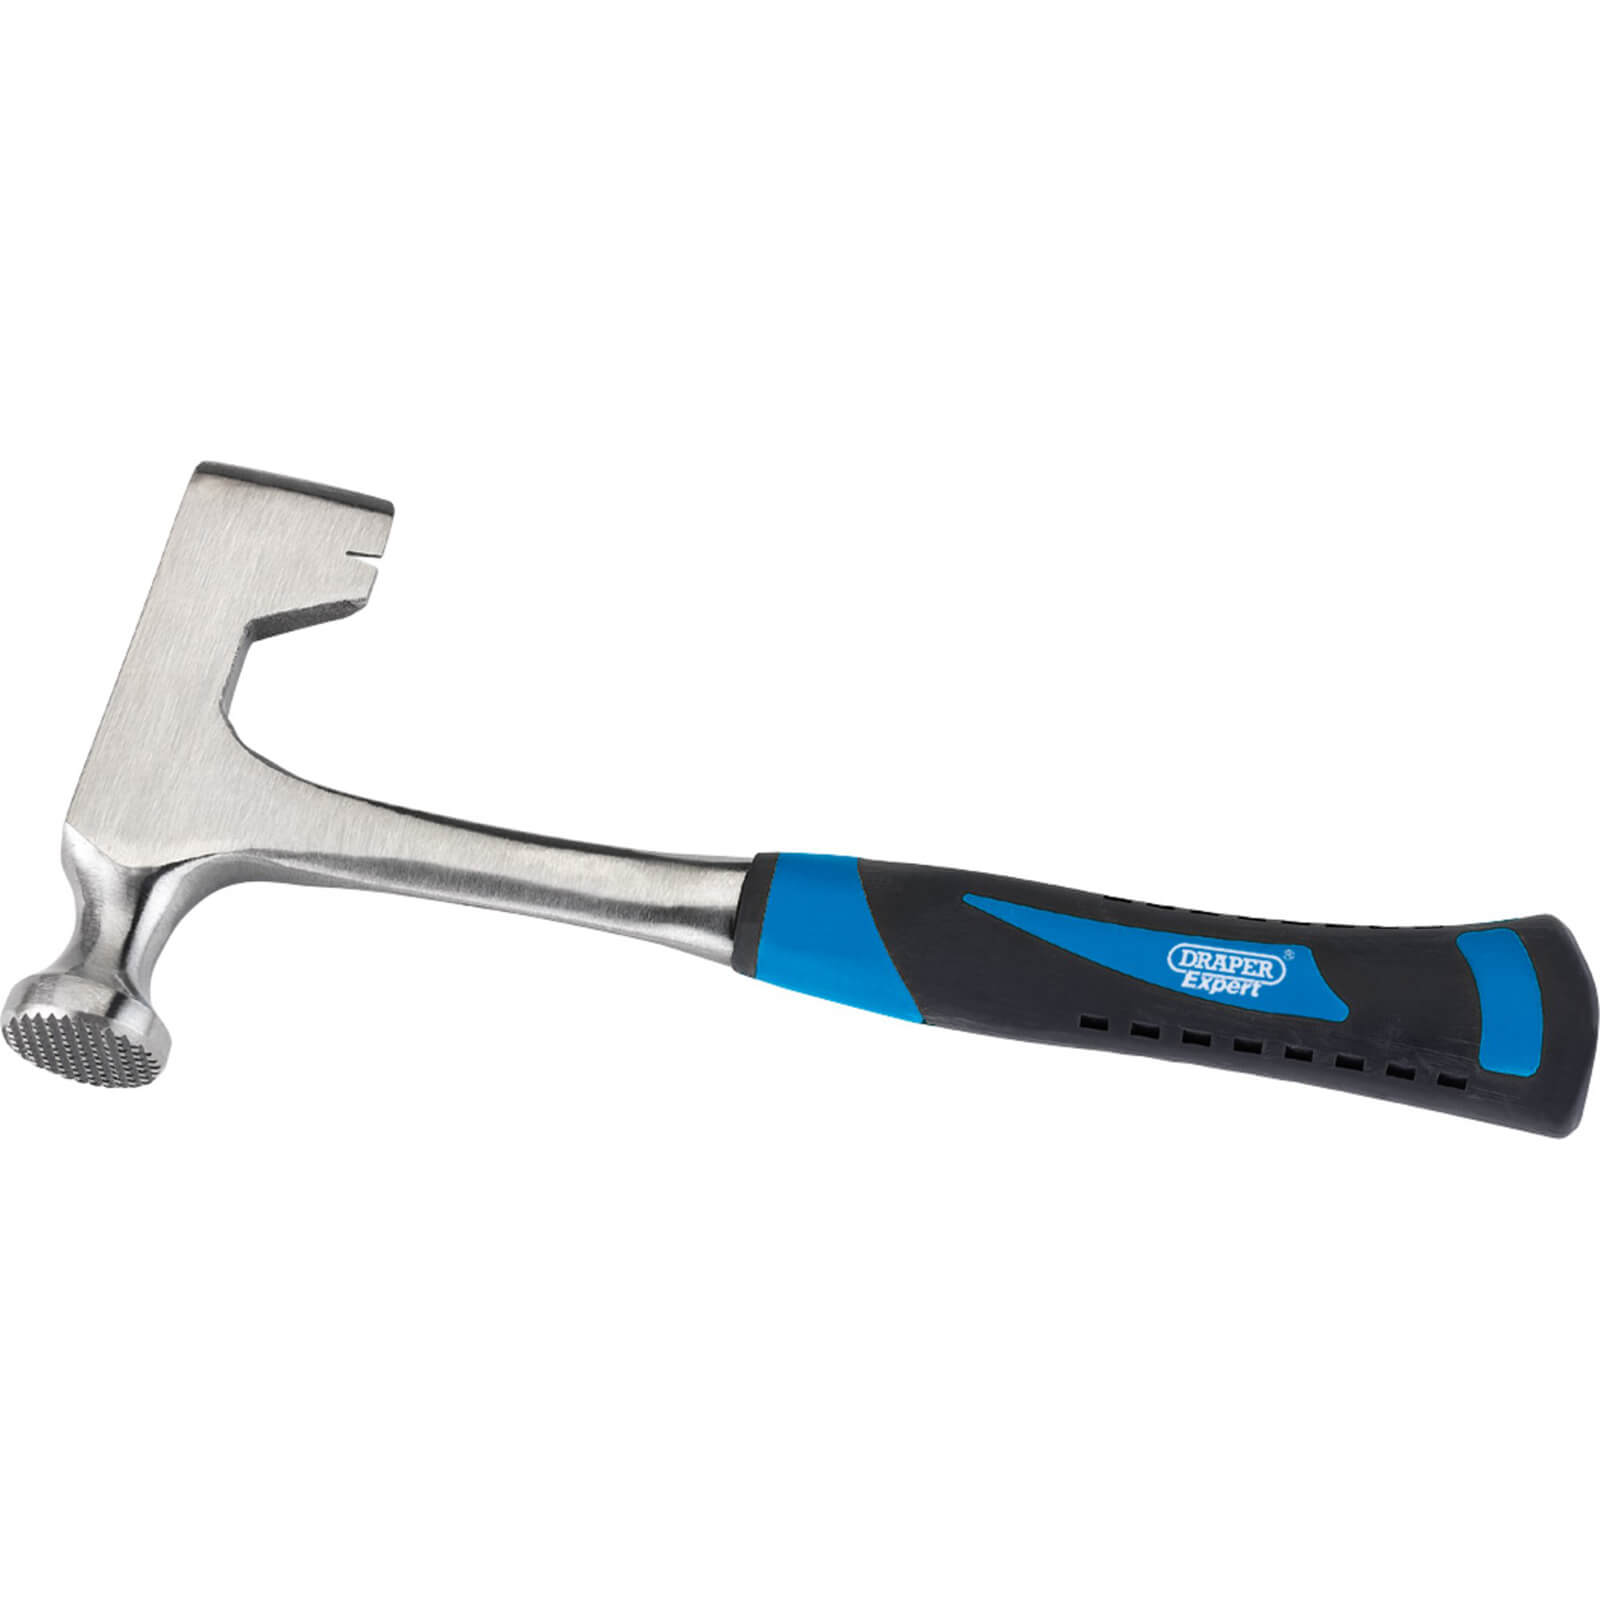 Image of Draper Expert Soft Grip Drywall Hammer 400g